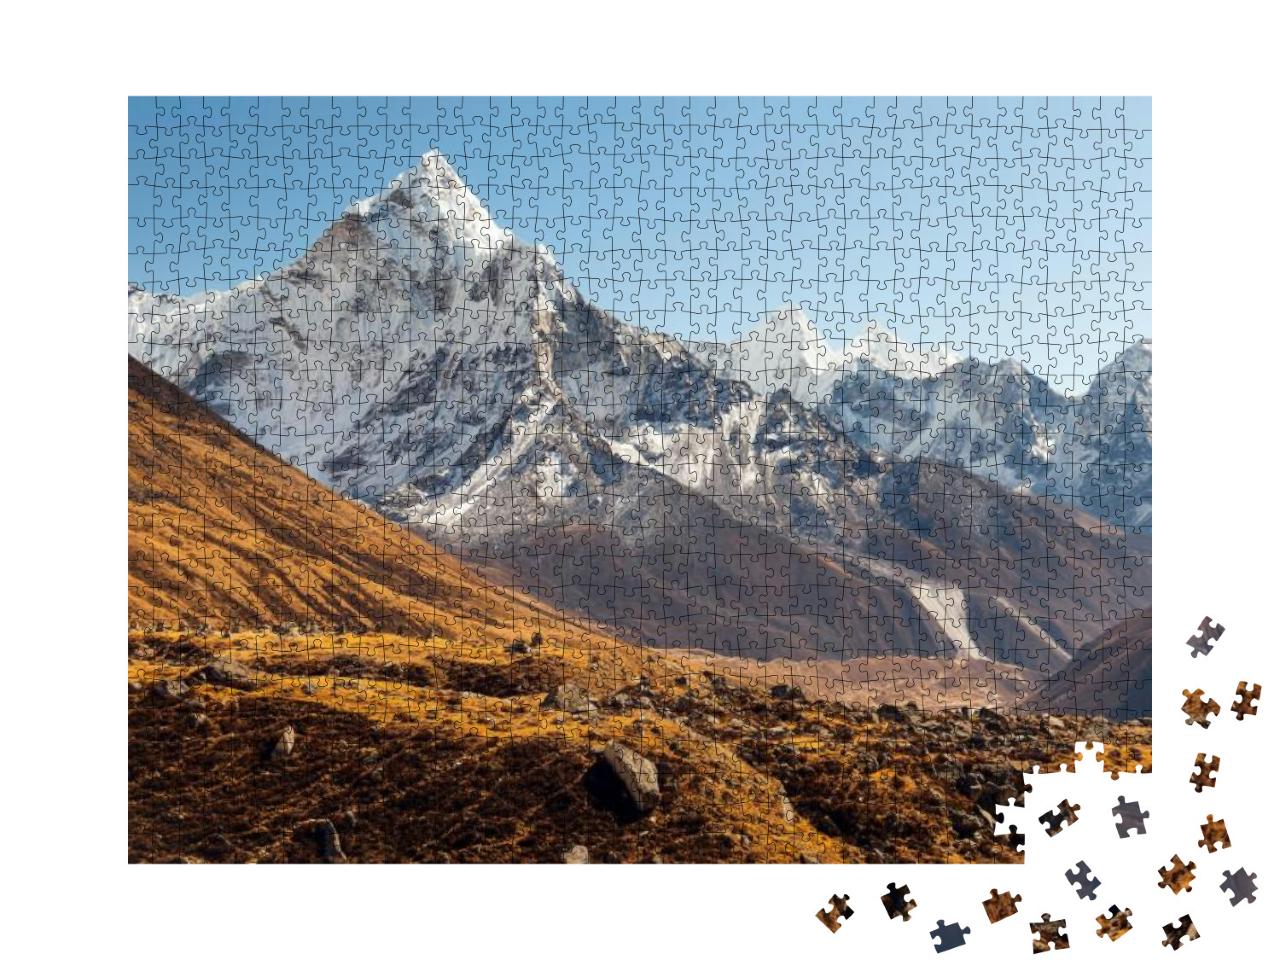 Puzzle 1000 Teile „Ama Dablam, Everest-Region, Himalaya, Nepal“